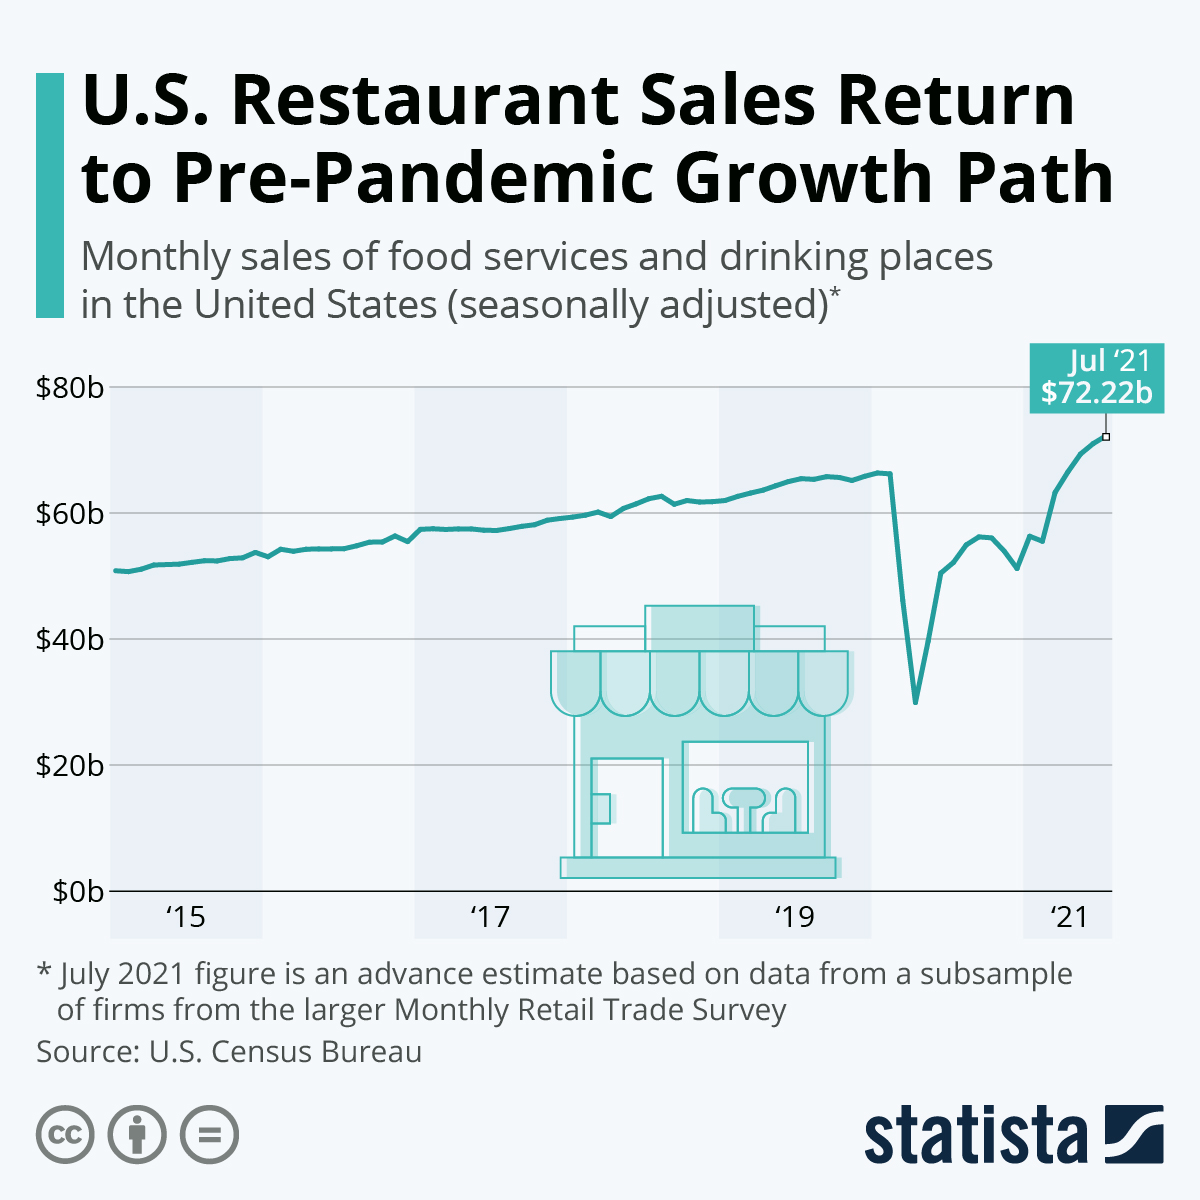 U.S. Restaurant Sales Return to Pre-Pandemic Growth Path